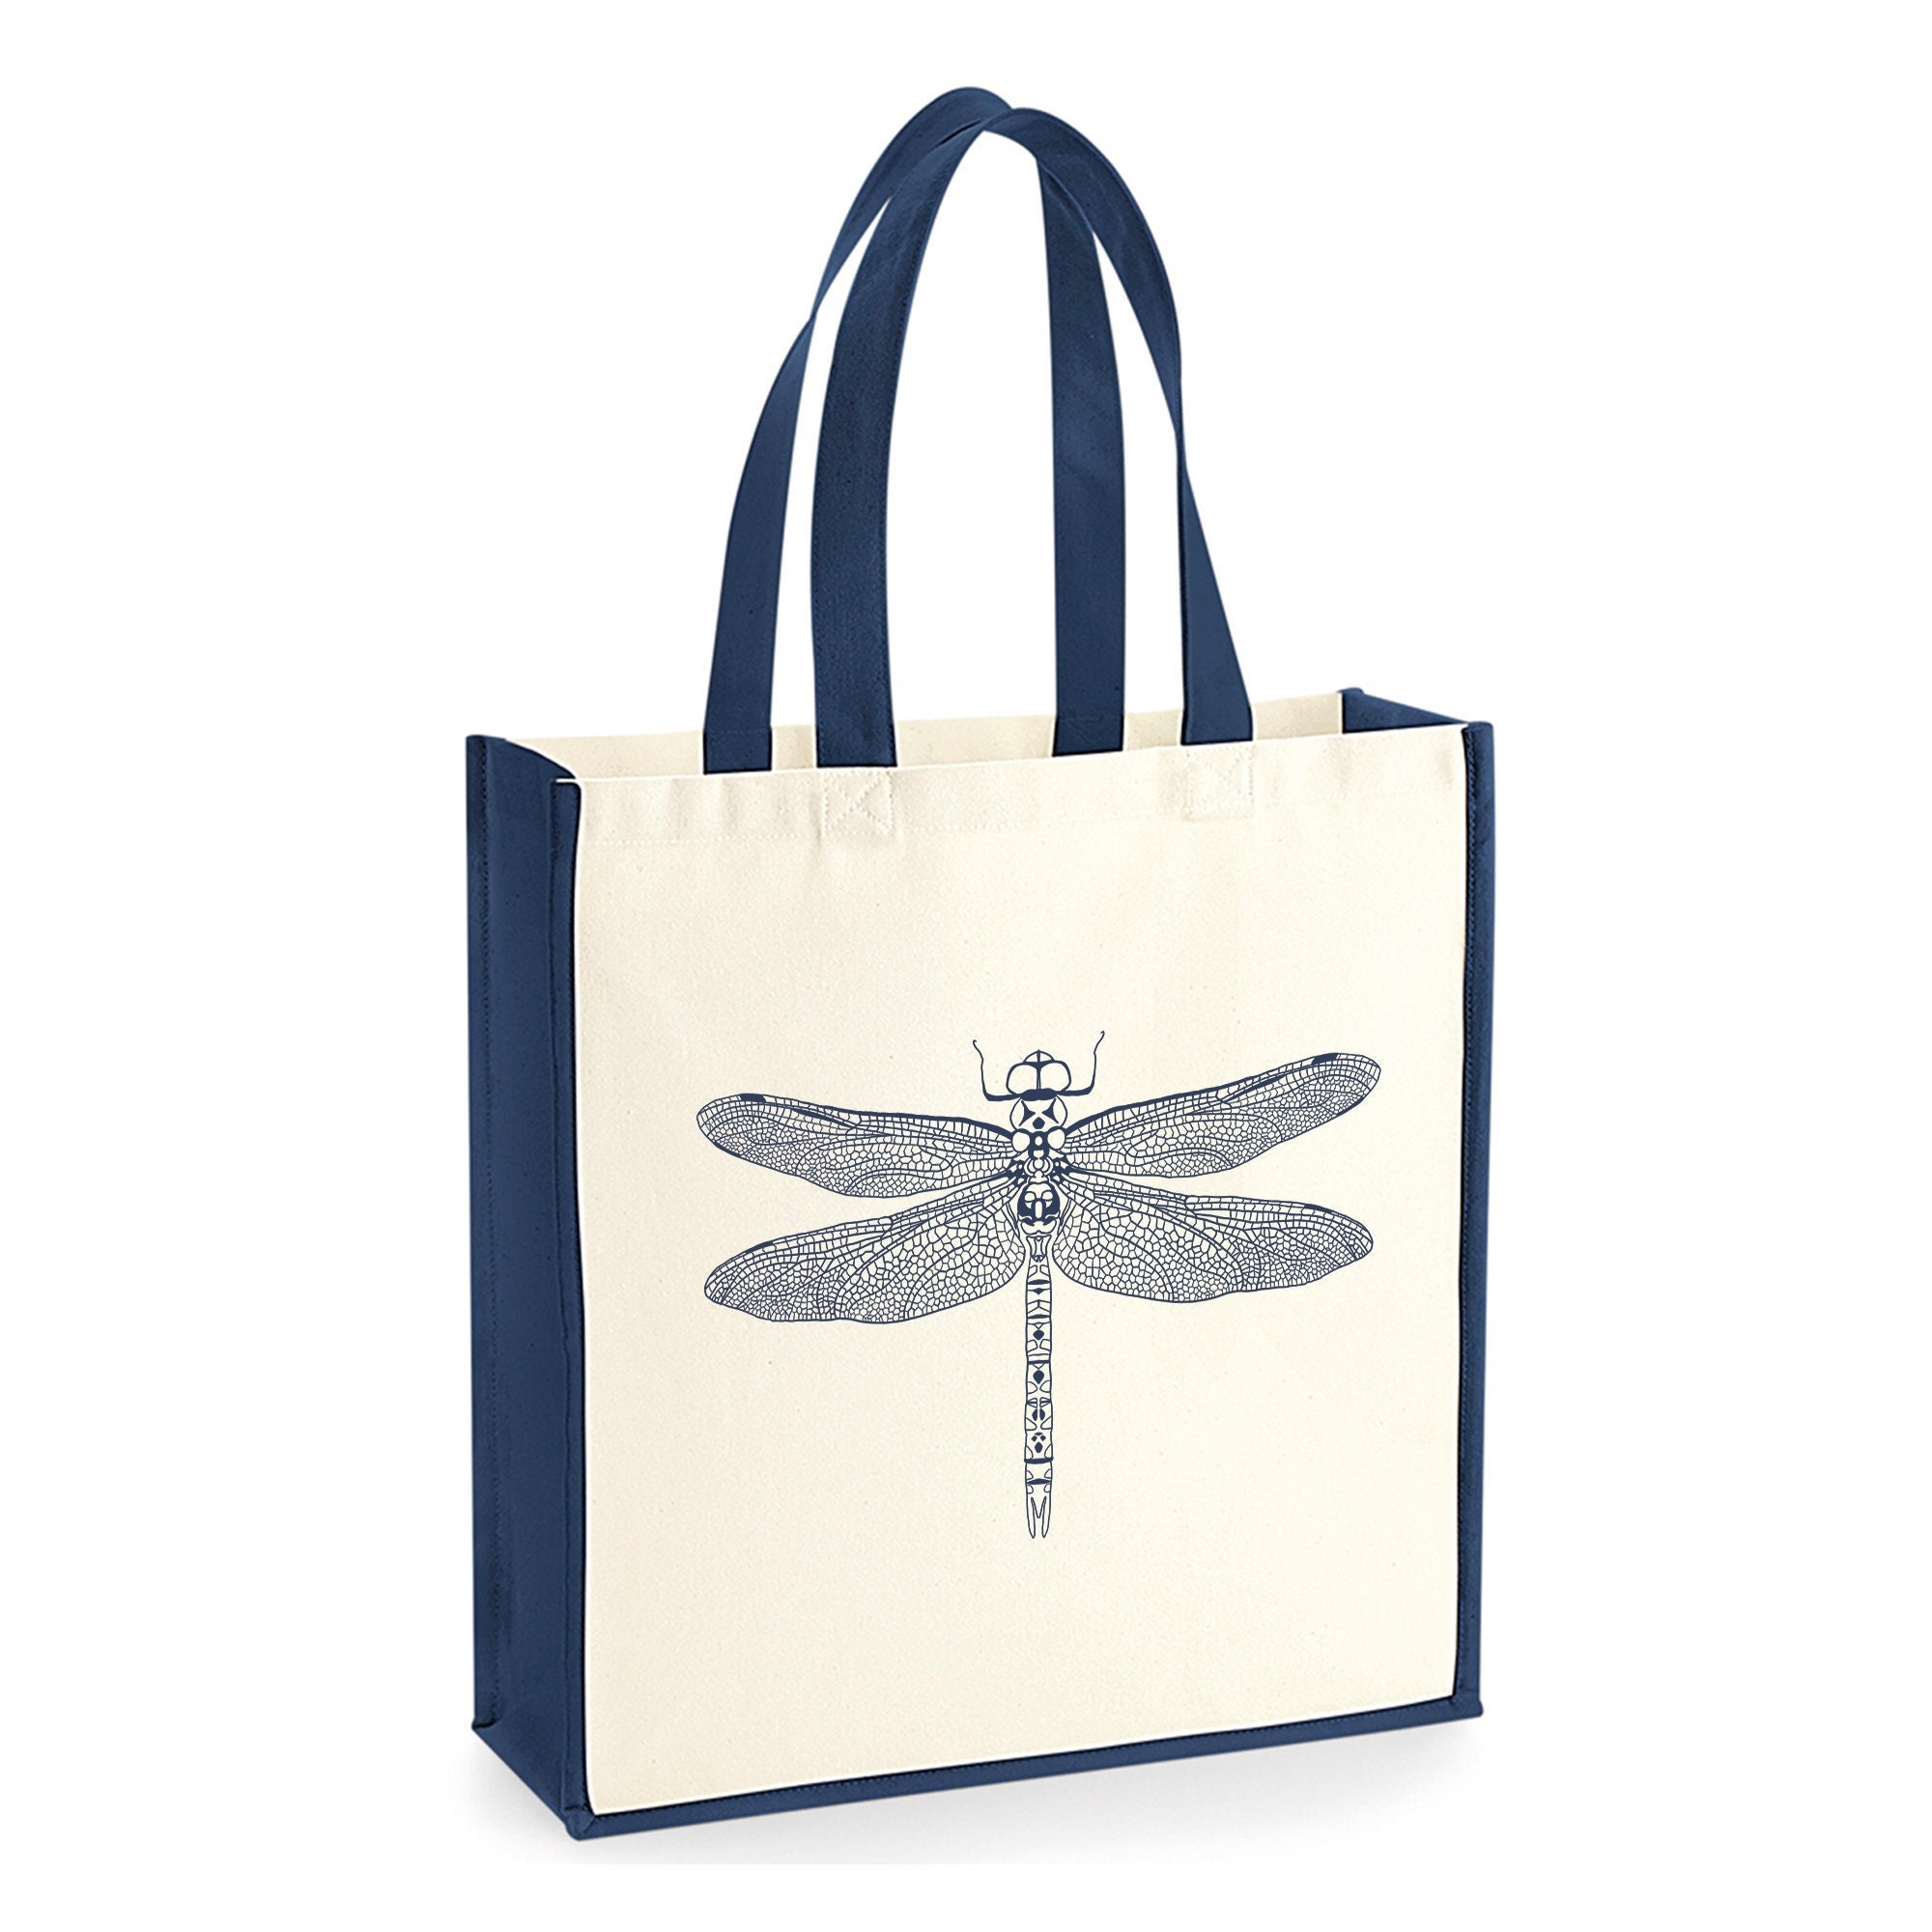 Dragonfly Canvas Bag at Rs 600.00 | प्रिंटेड कैनवस बैग - Charkha Tales,  Lucknow | ID: 2851803190855